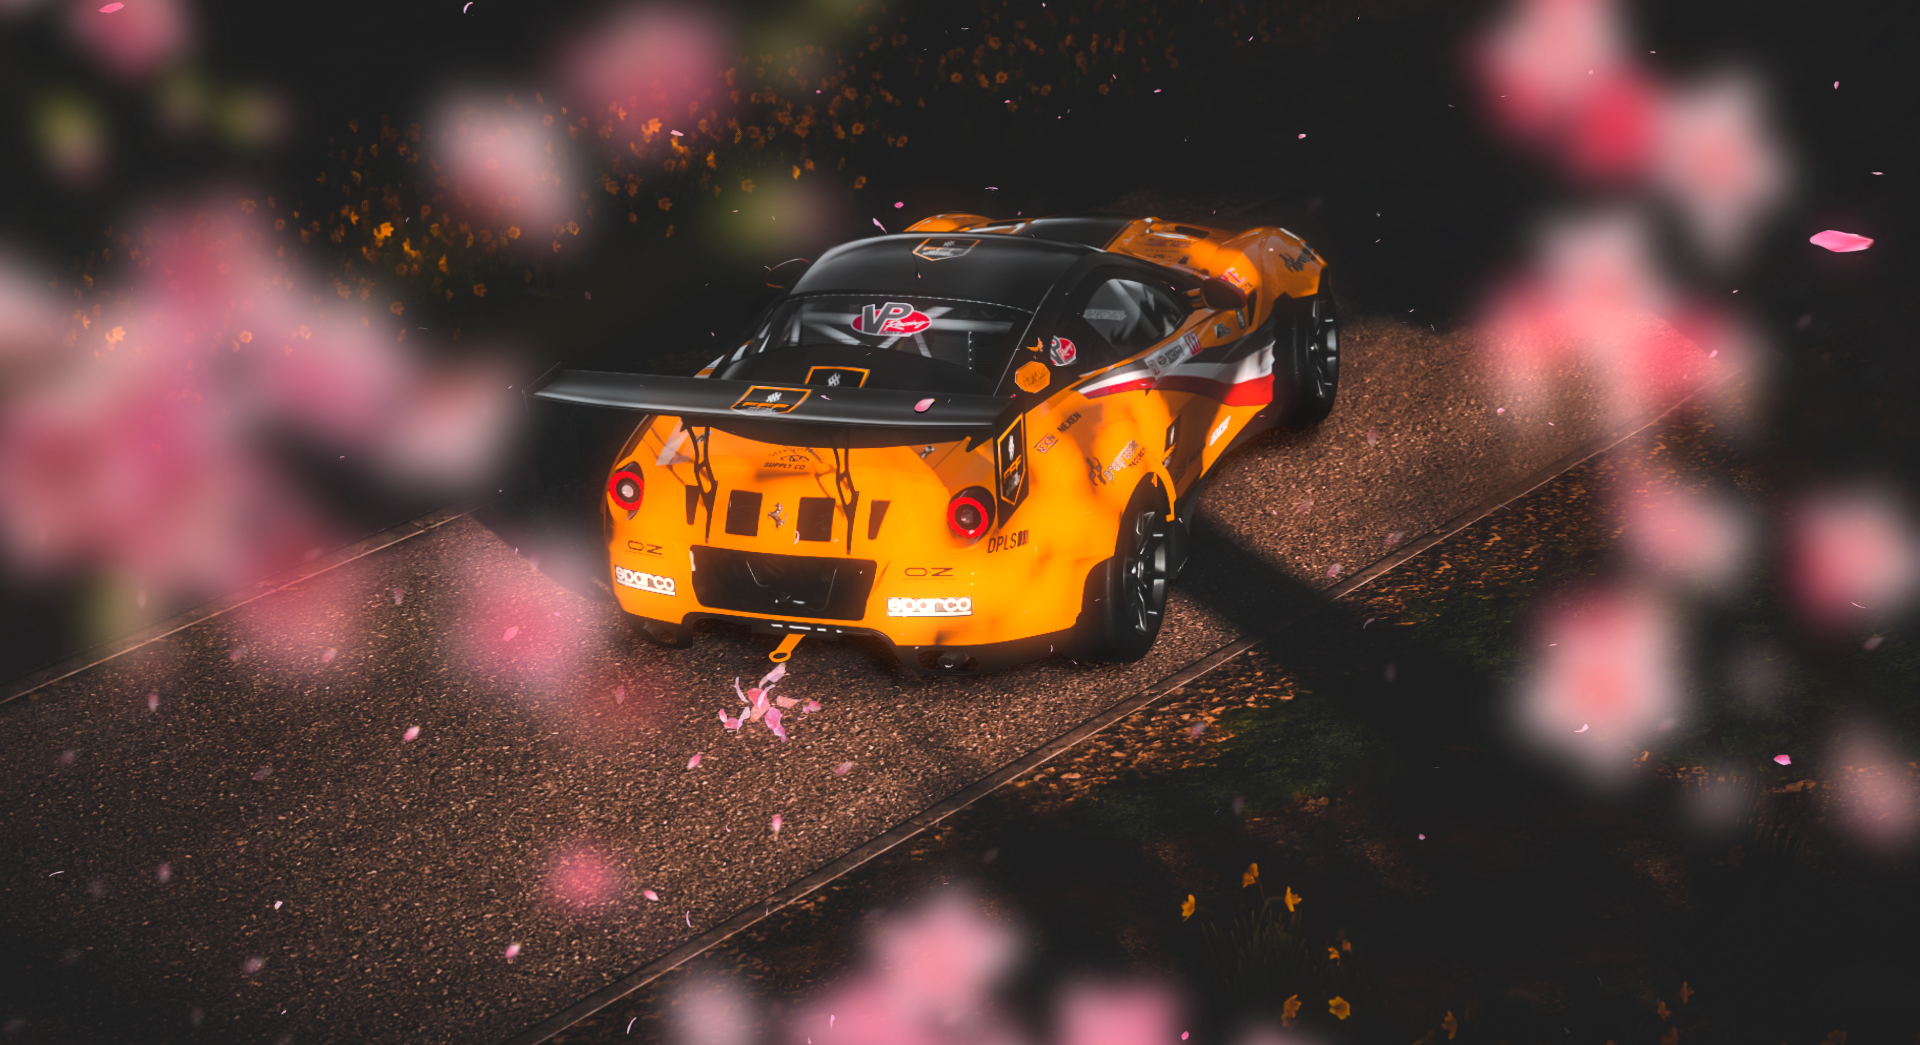 Ferrari under the cherry blossom live wallpaper [DOWNLOAD FREE]